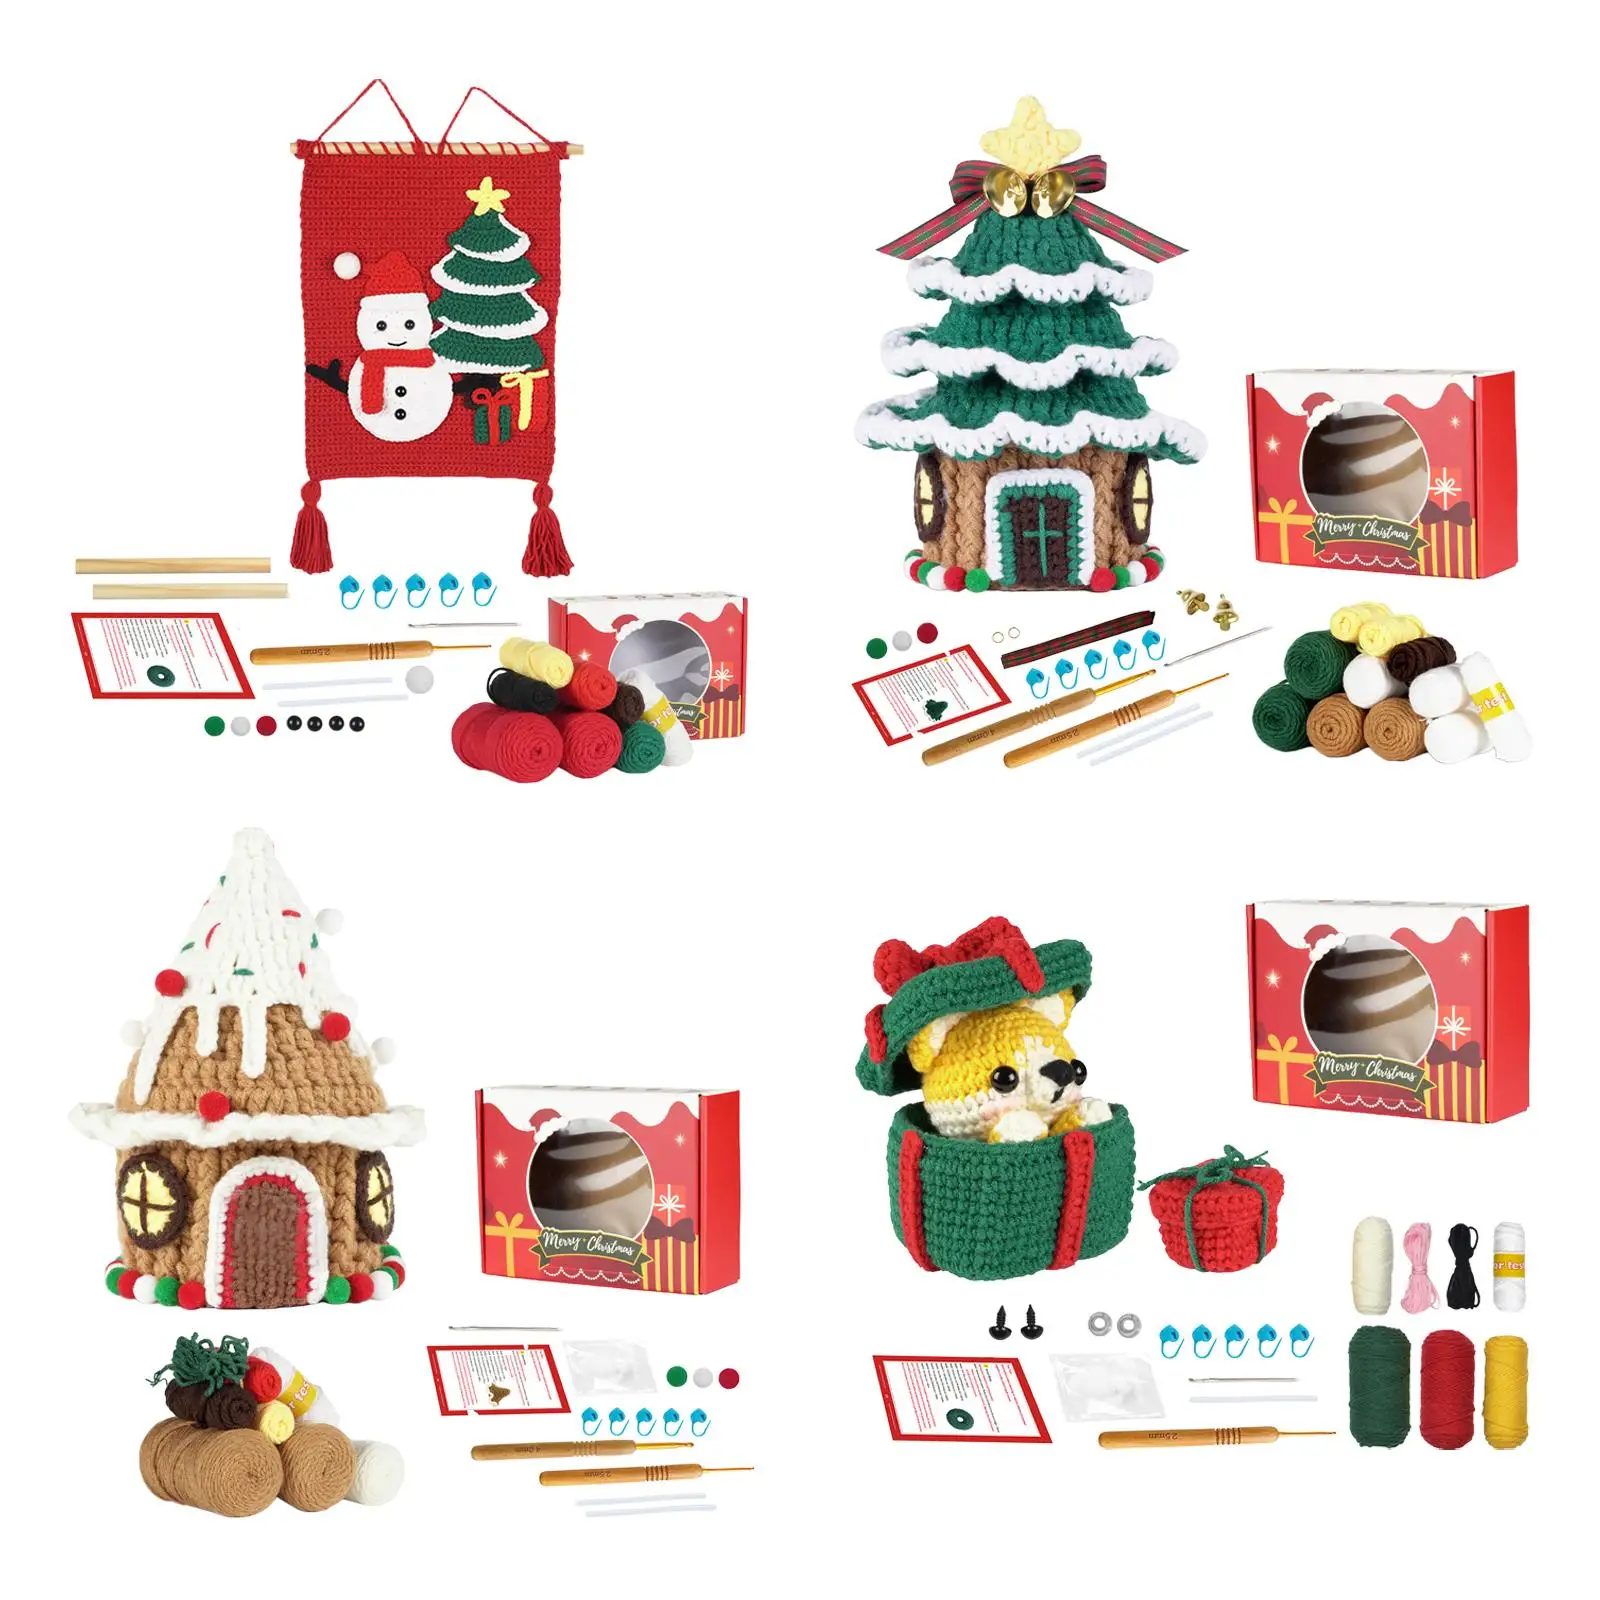 Christmas Crochet Kits Make Your Own Doll Crochet Starter Kits for Christmas Gift Patios Birthday Gift Christmas Tree Porches